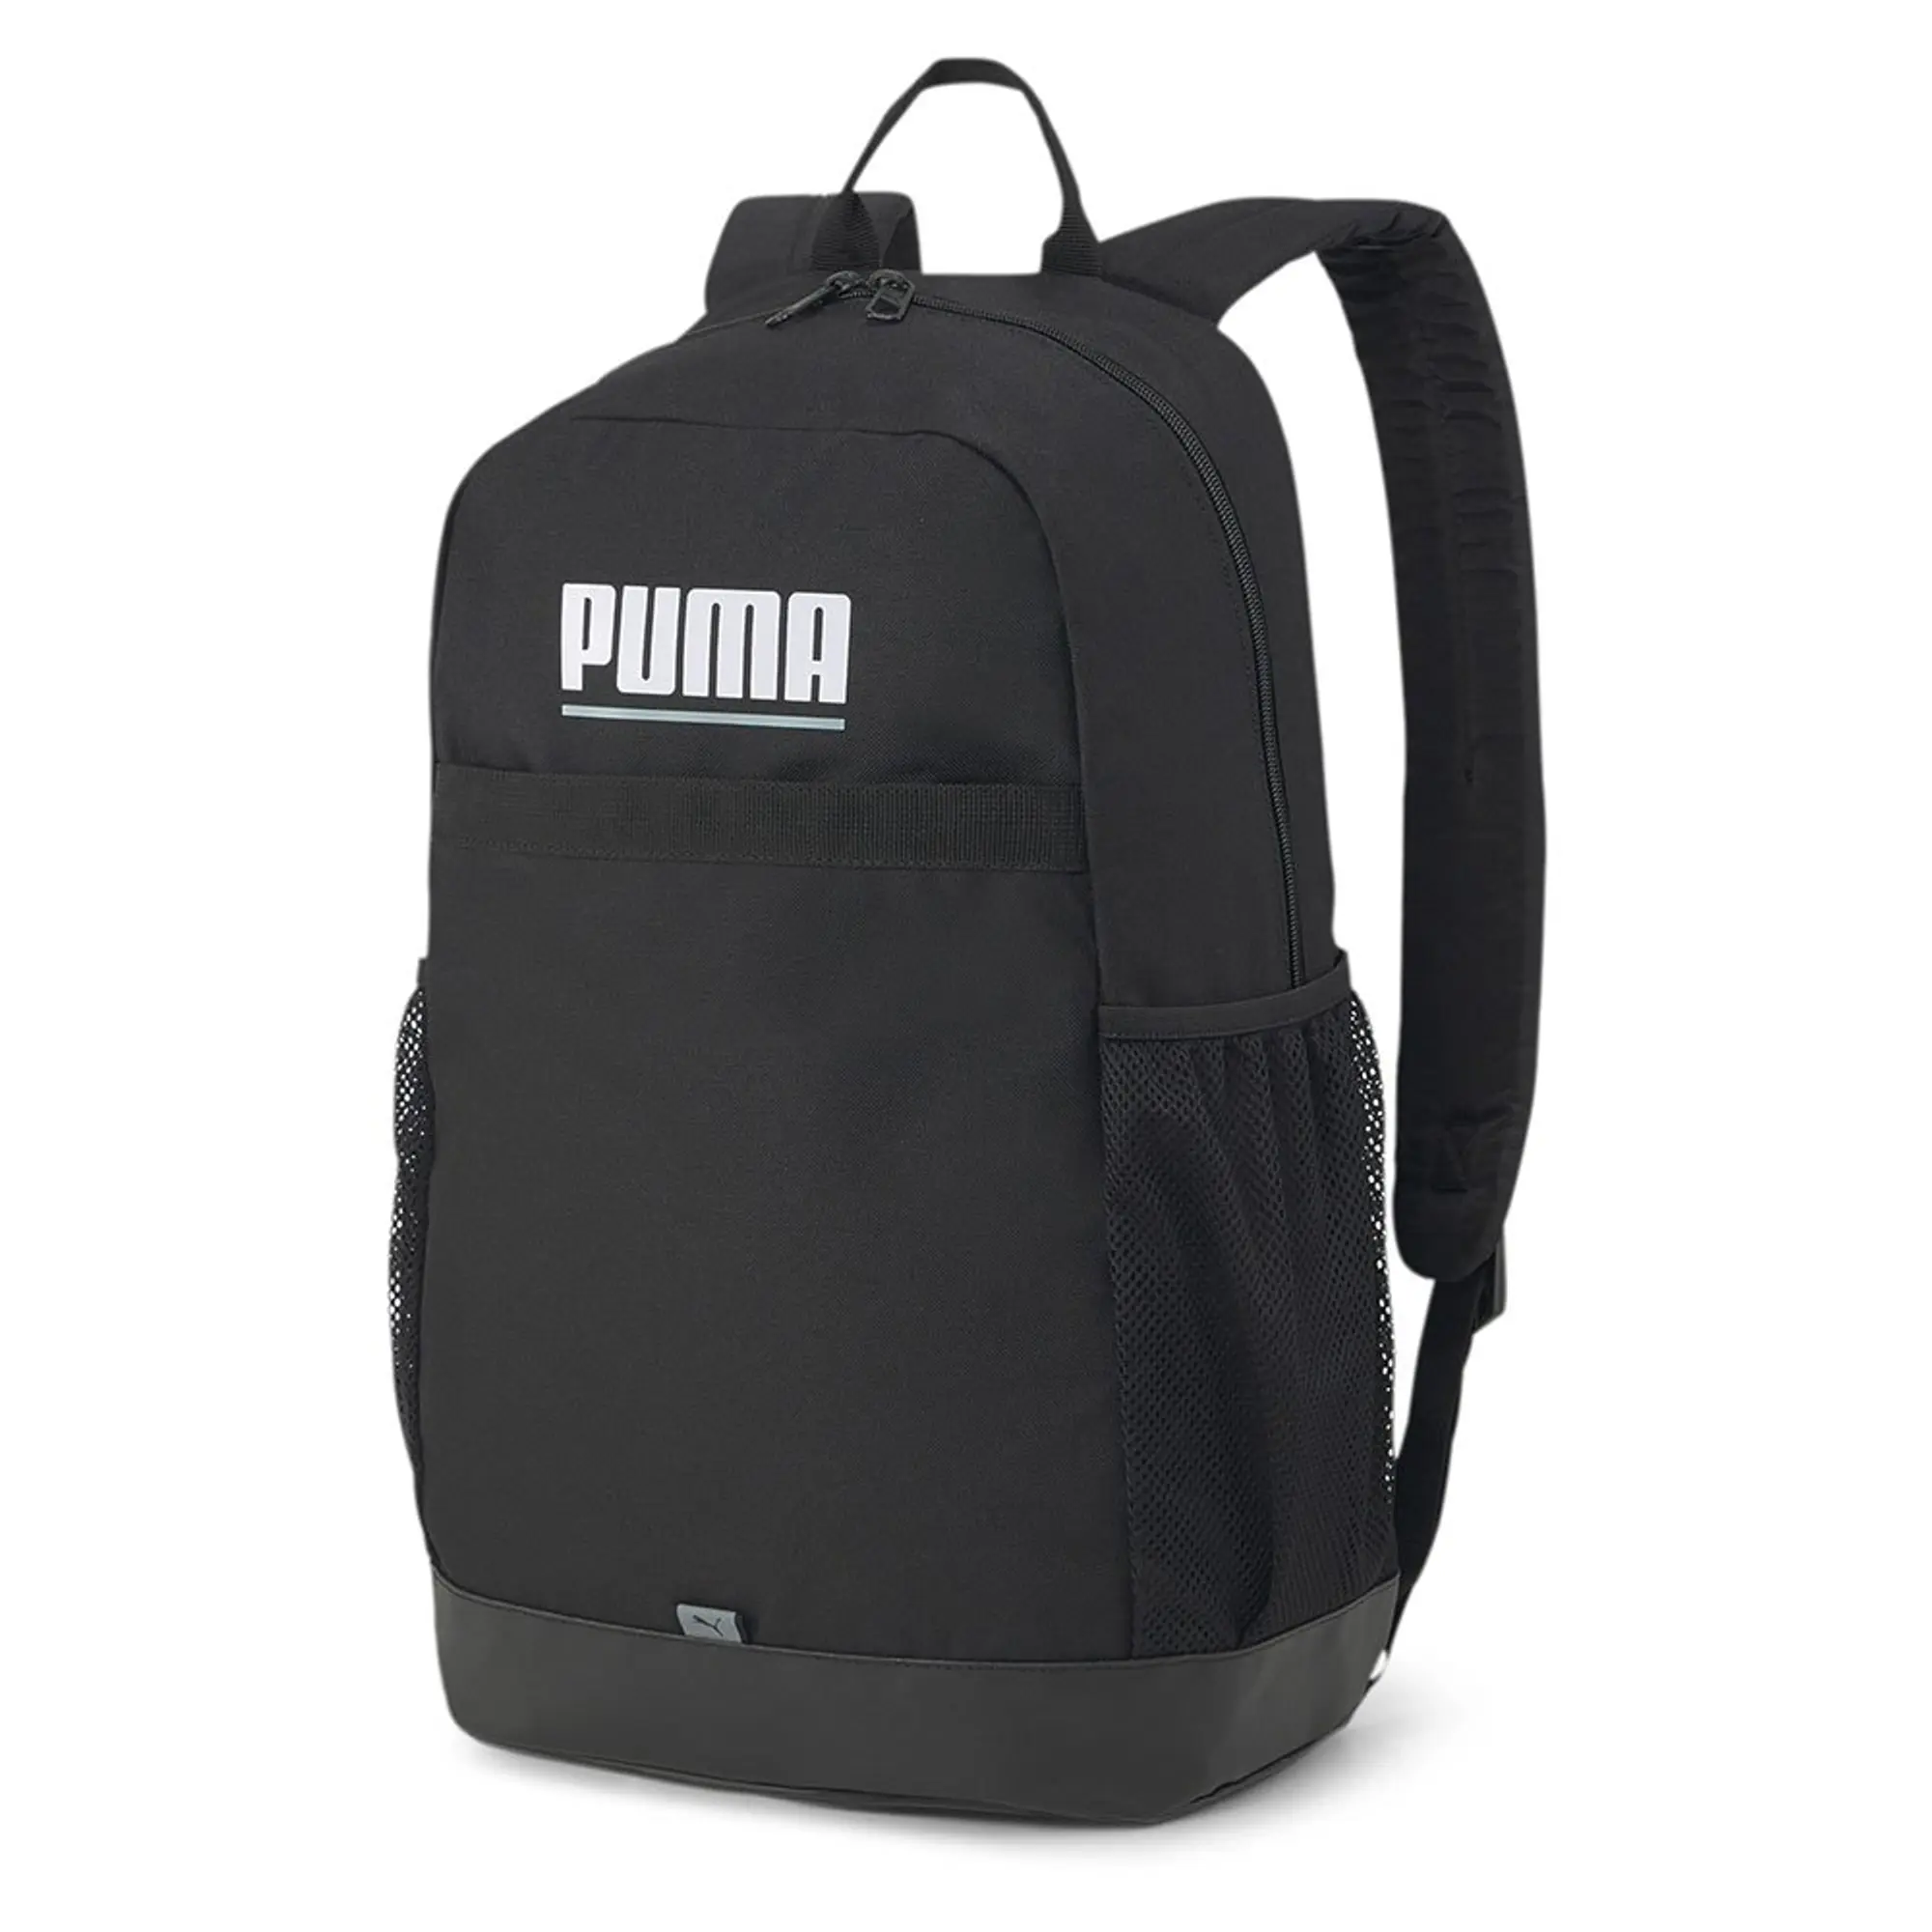 Puma Plus Backpack  - Black